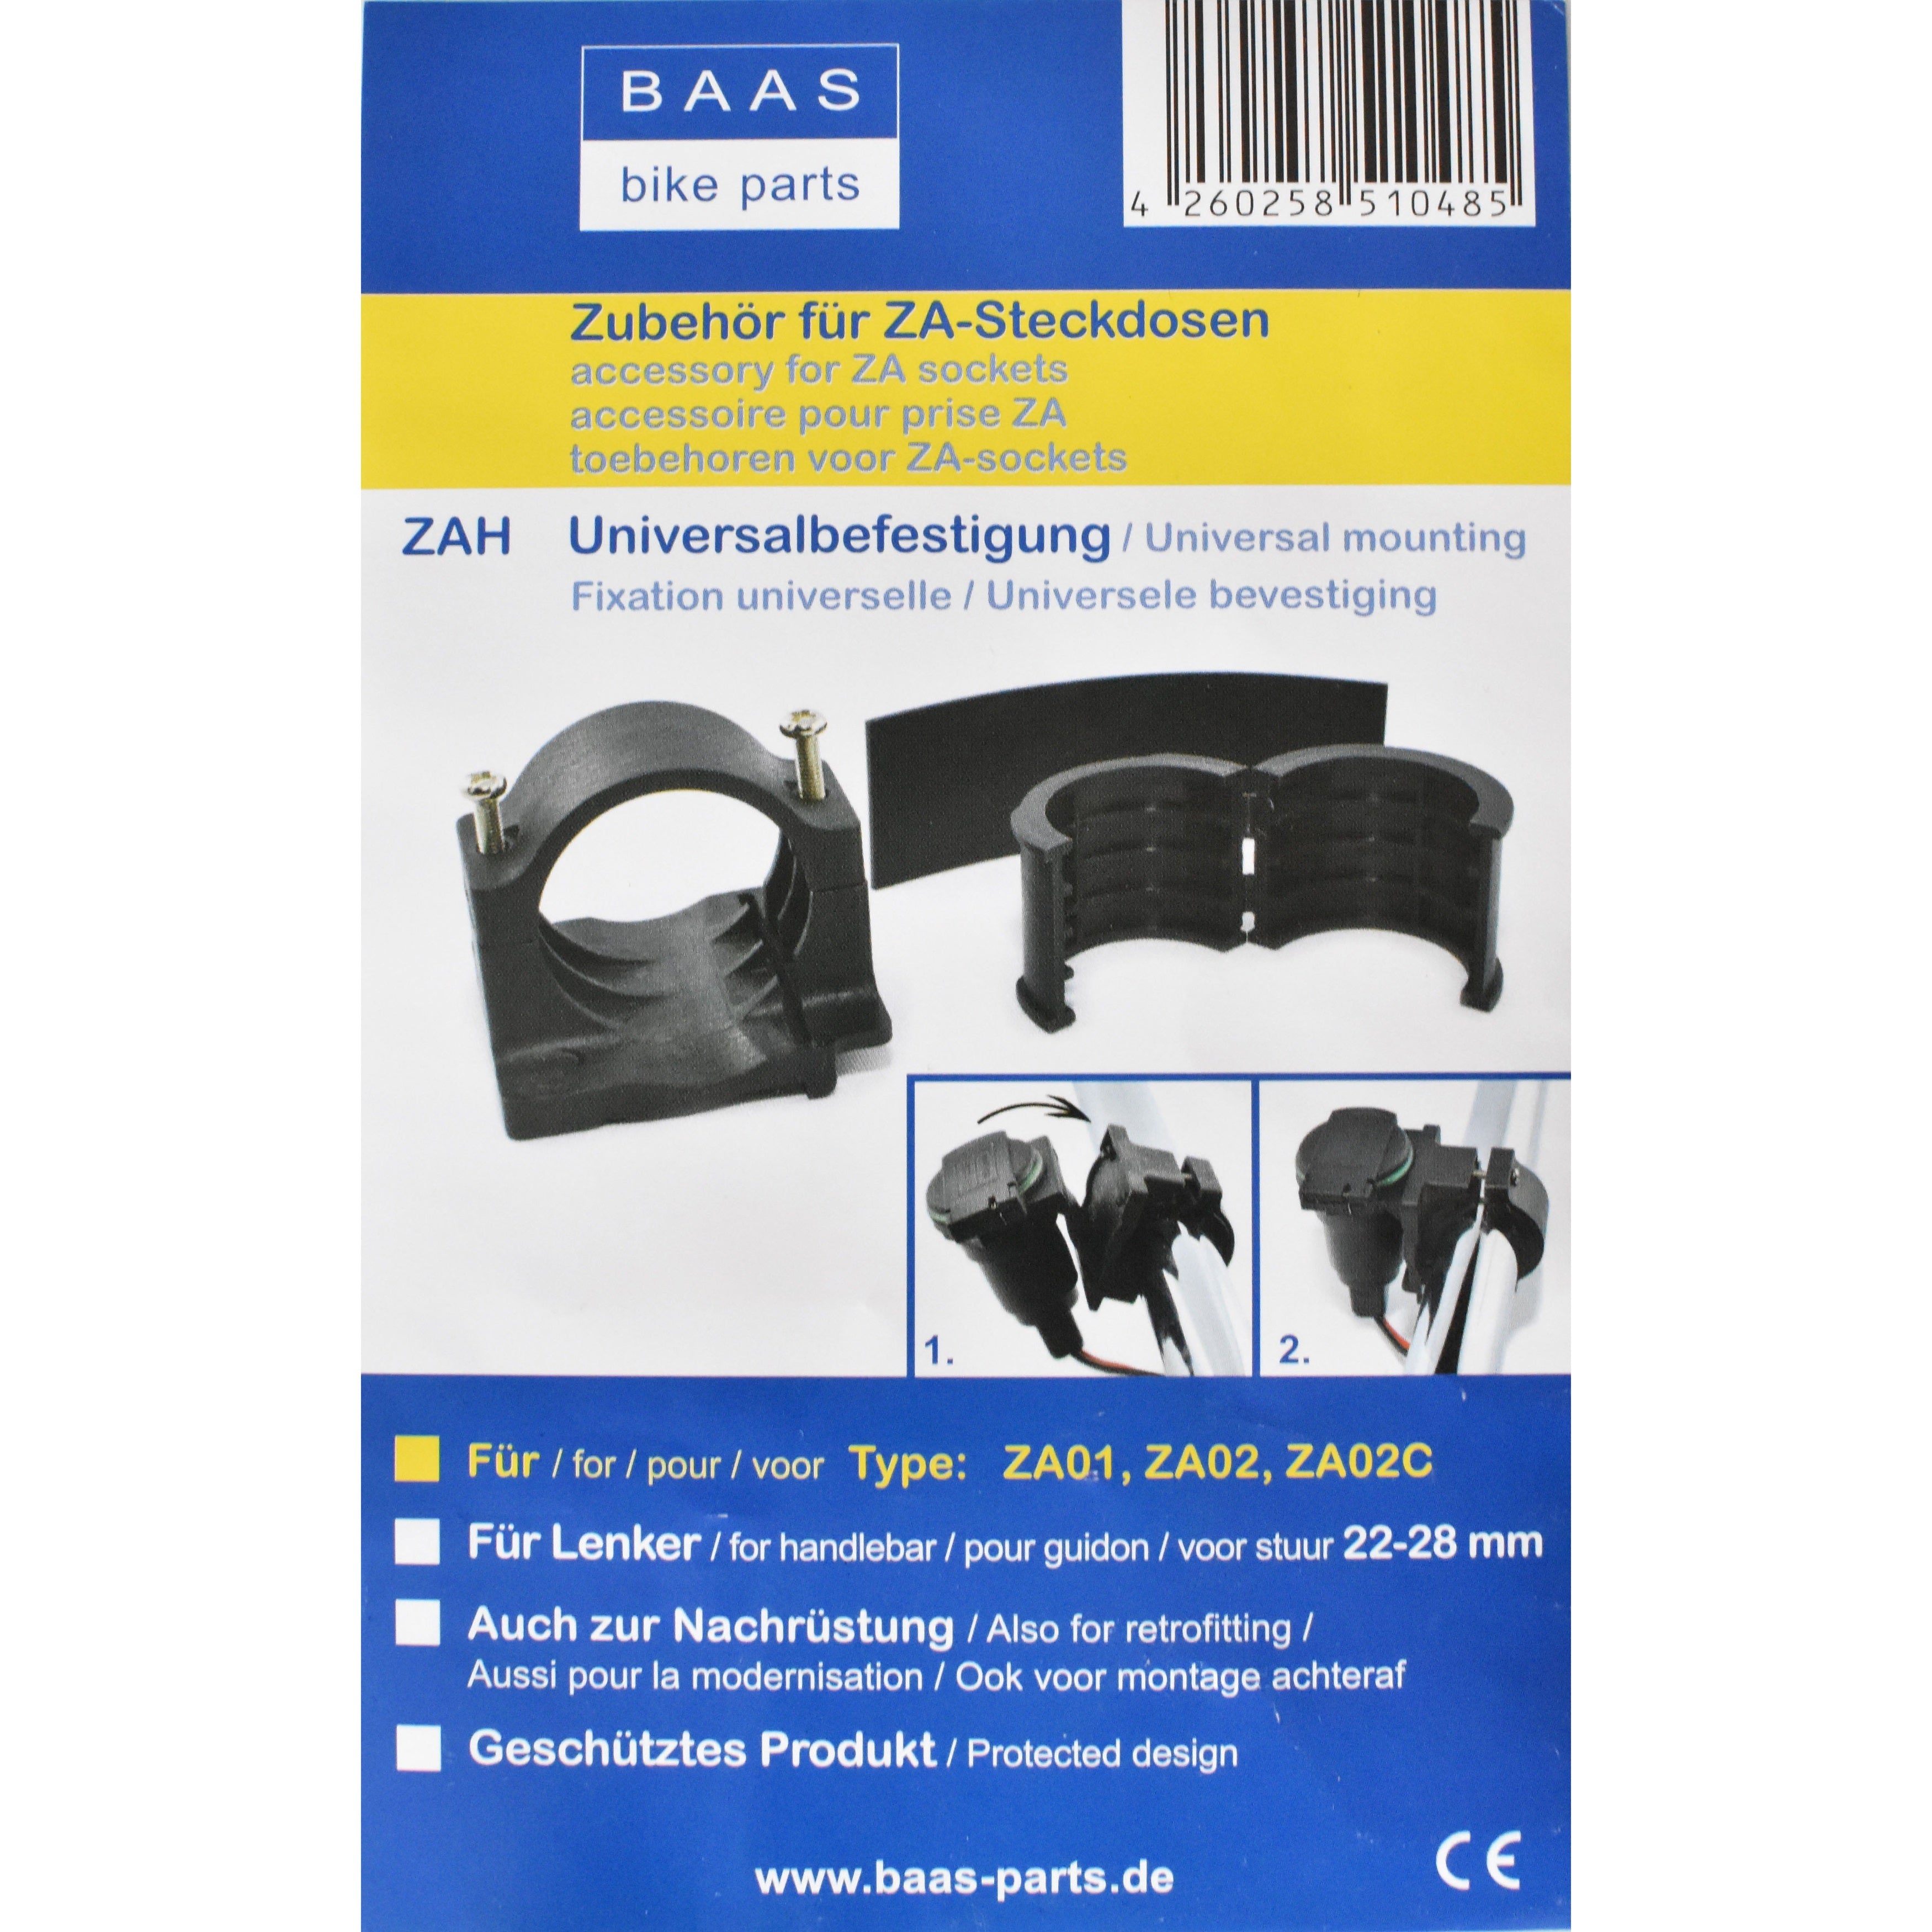 Zubehör BAAS ZA-Steckdosen: Universalbefestigung für Motorrad Lenkermontage Produktinformationsblatt